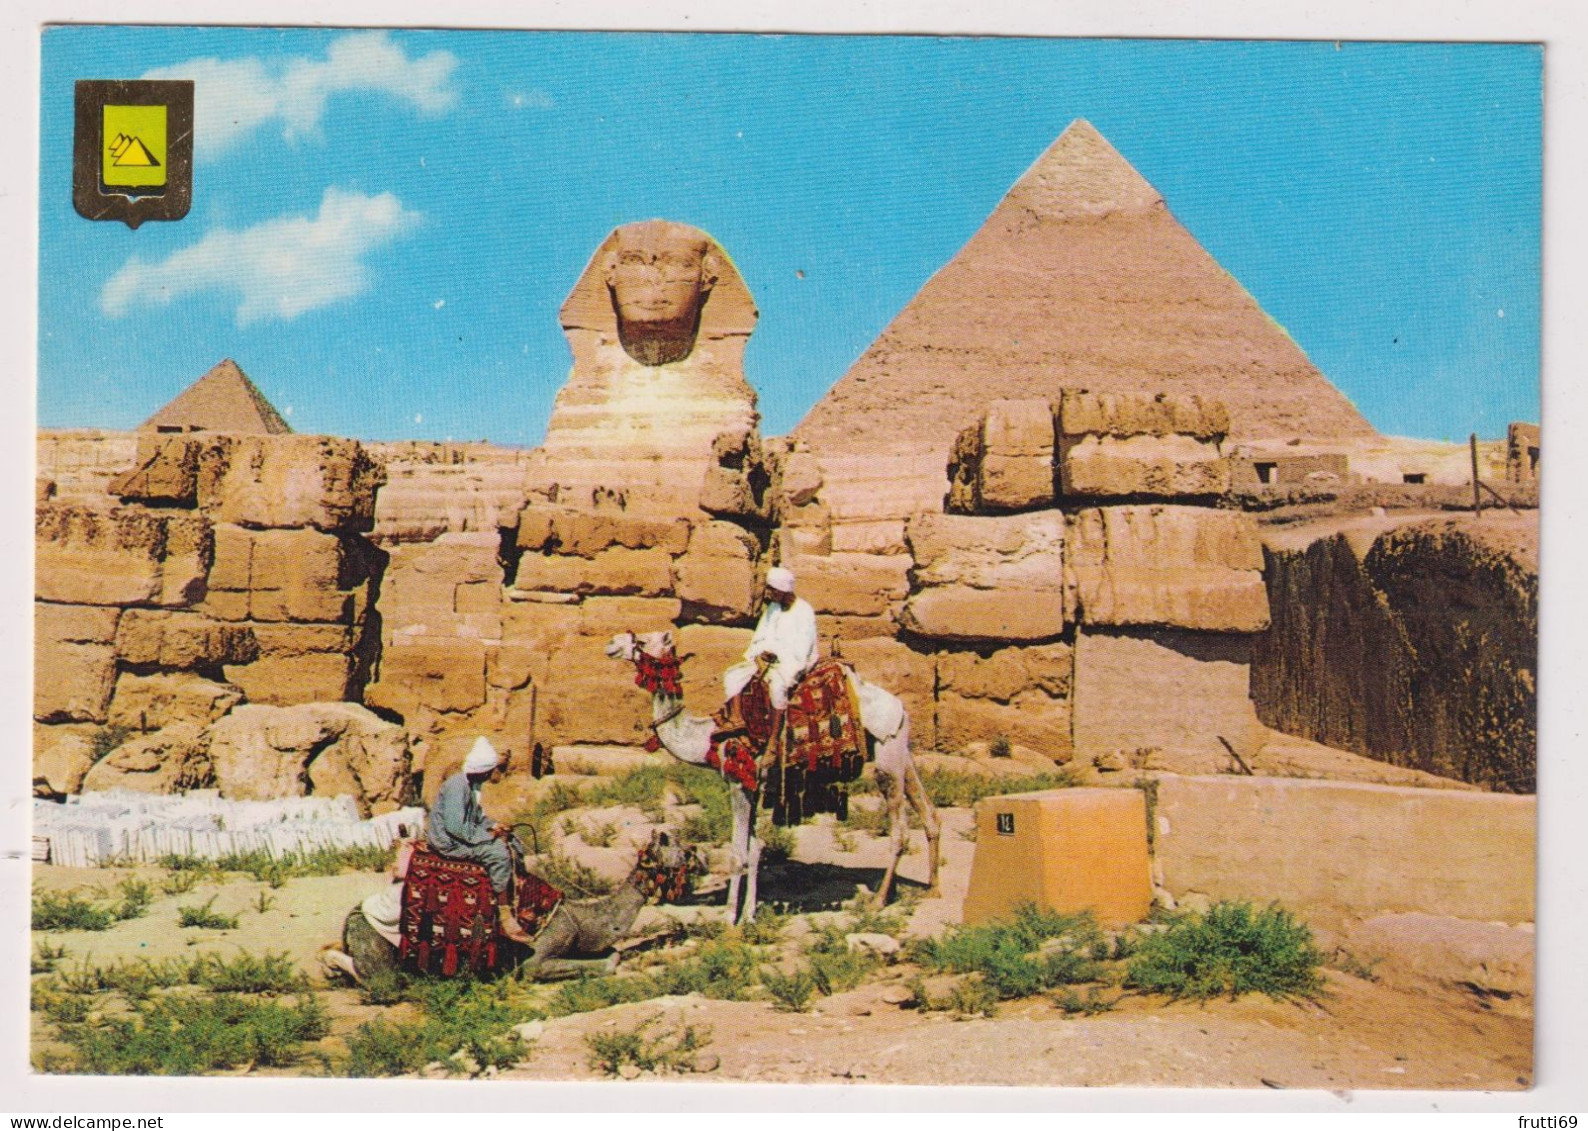 AK 198207  EGYPT - Giza - The Great Sphinx,  Kephren And The Mycerinos Pyramids - Pyramiden